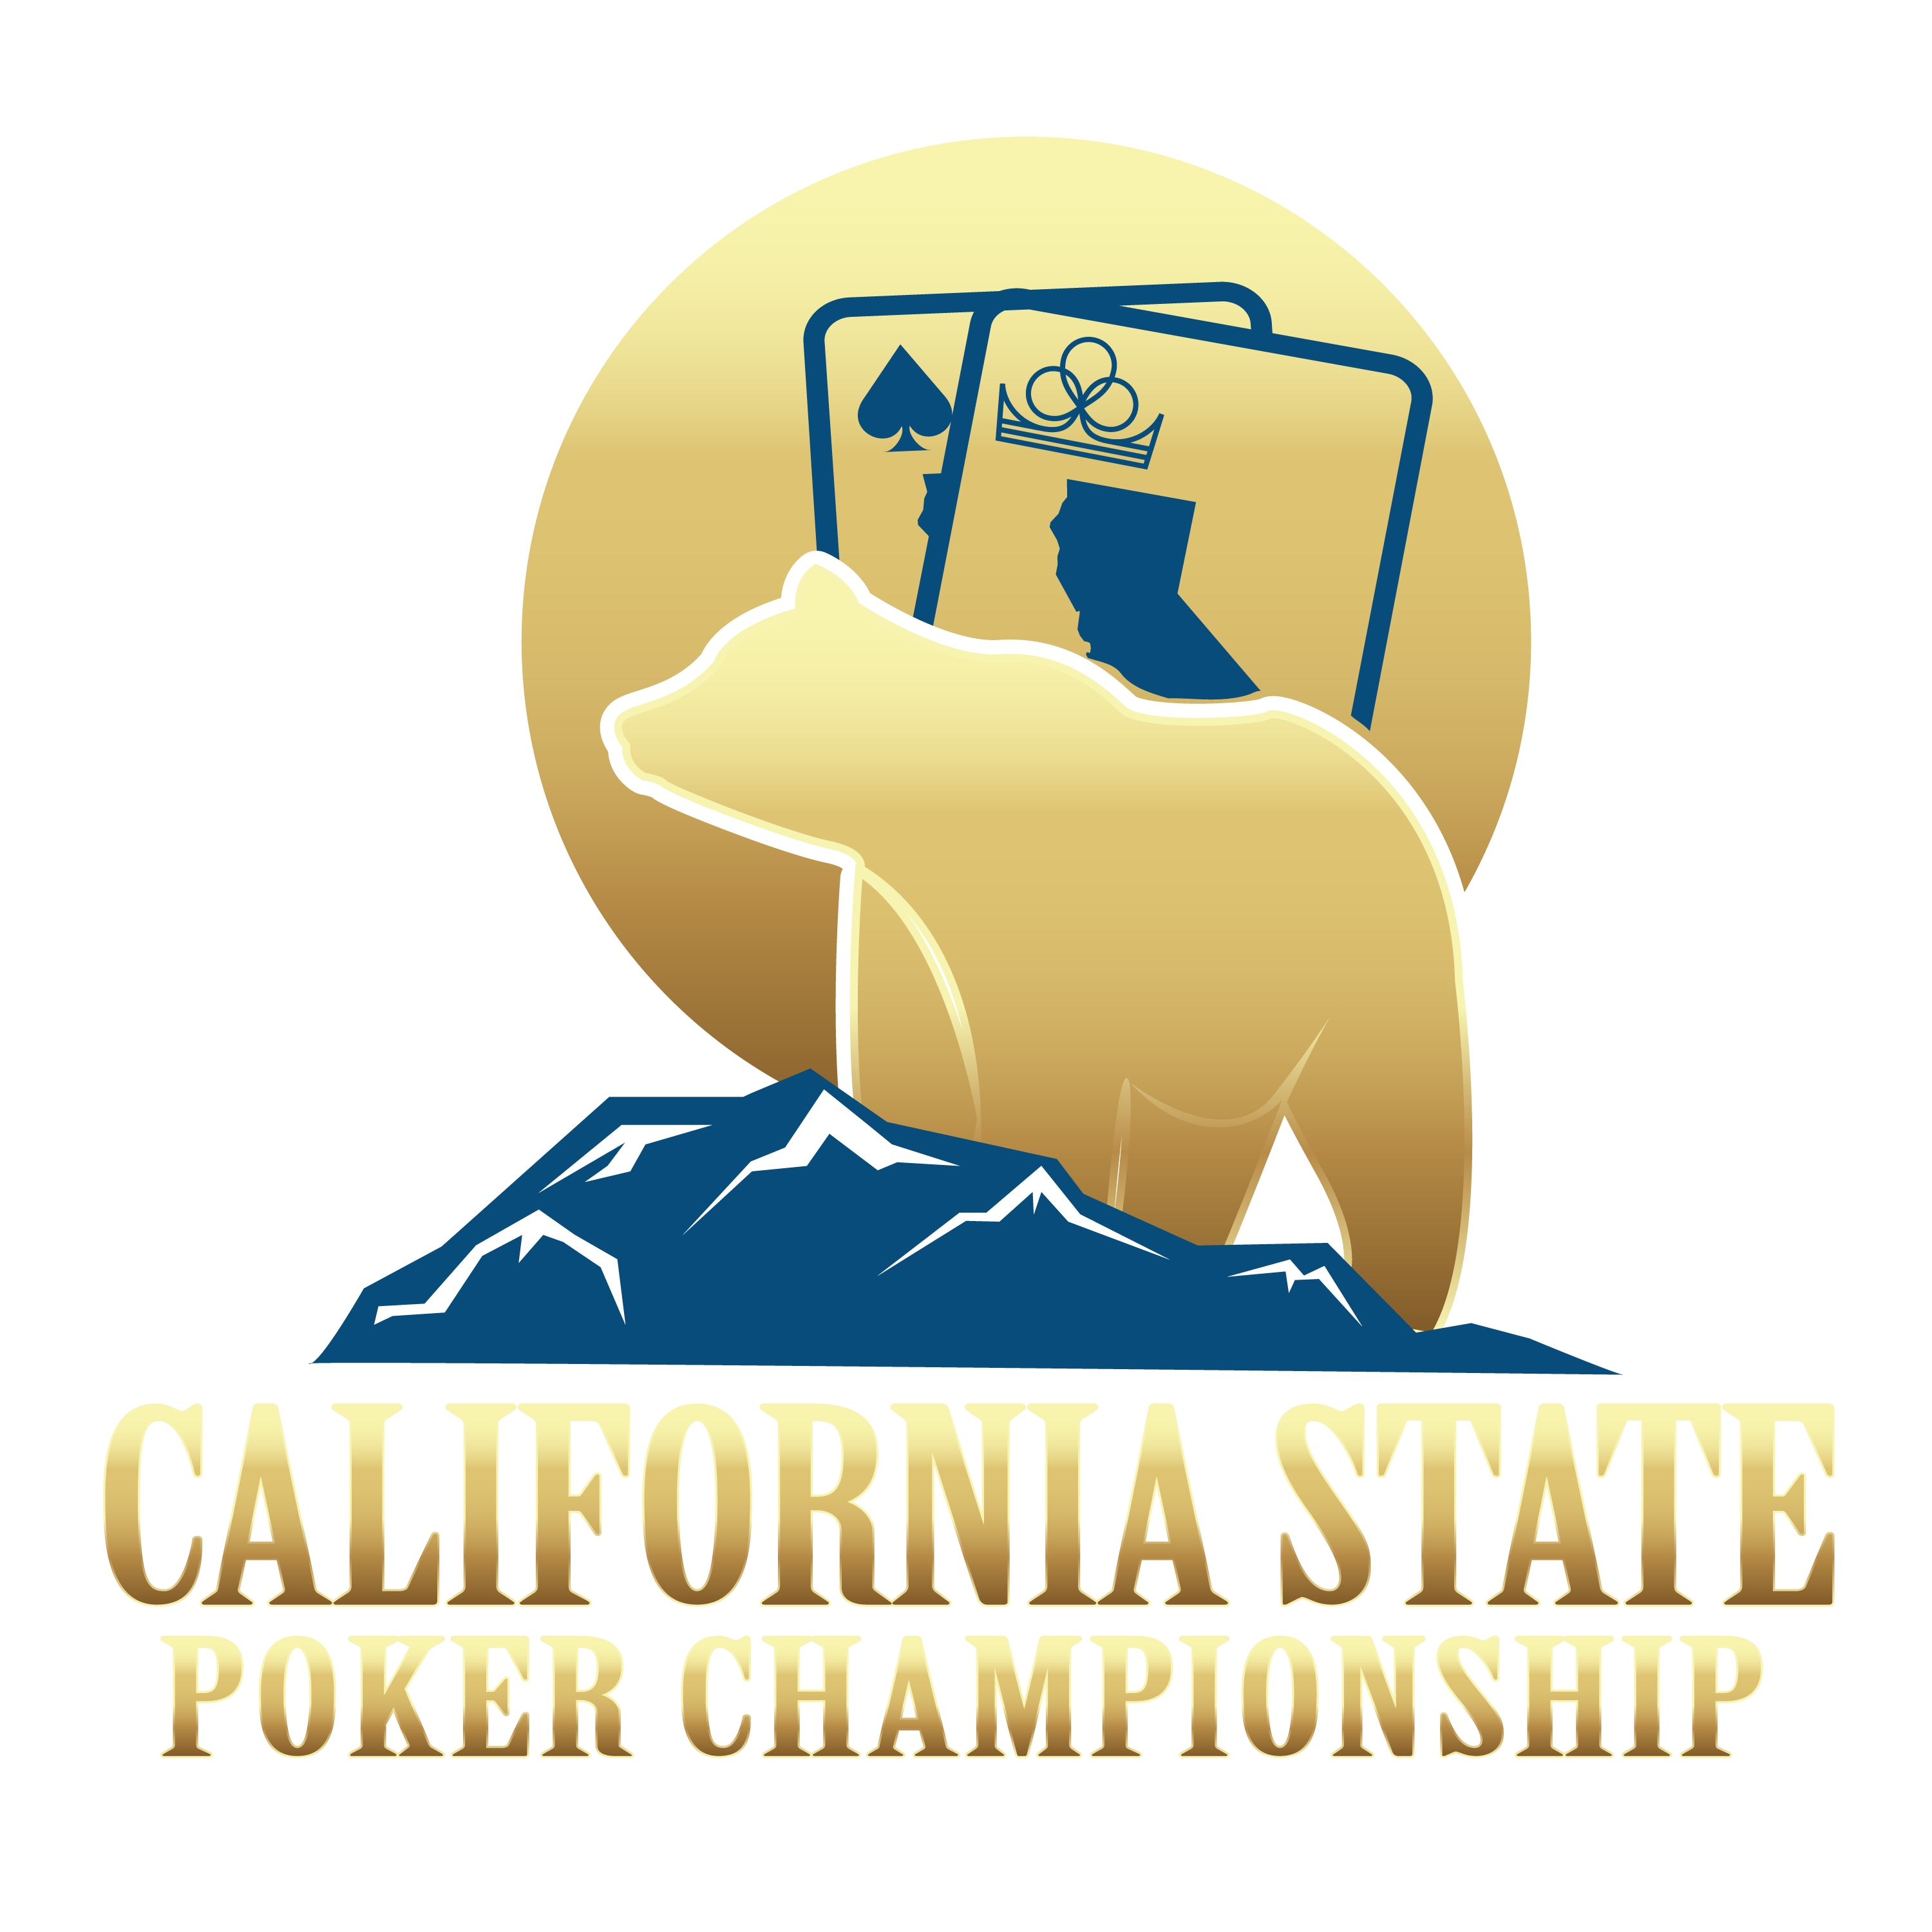 Cal State Poker Championship logo